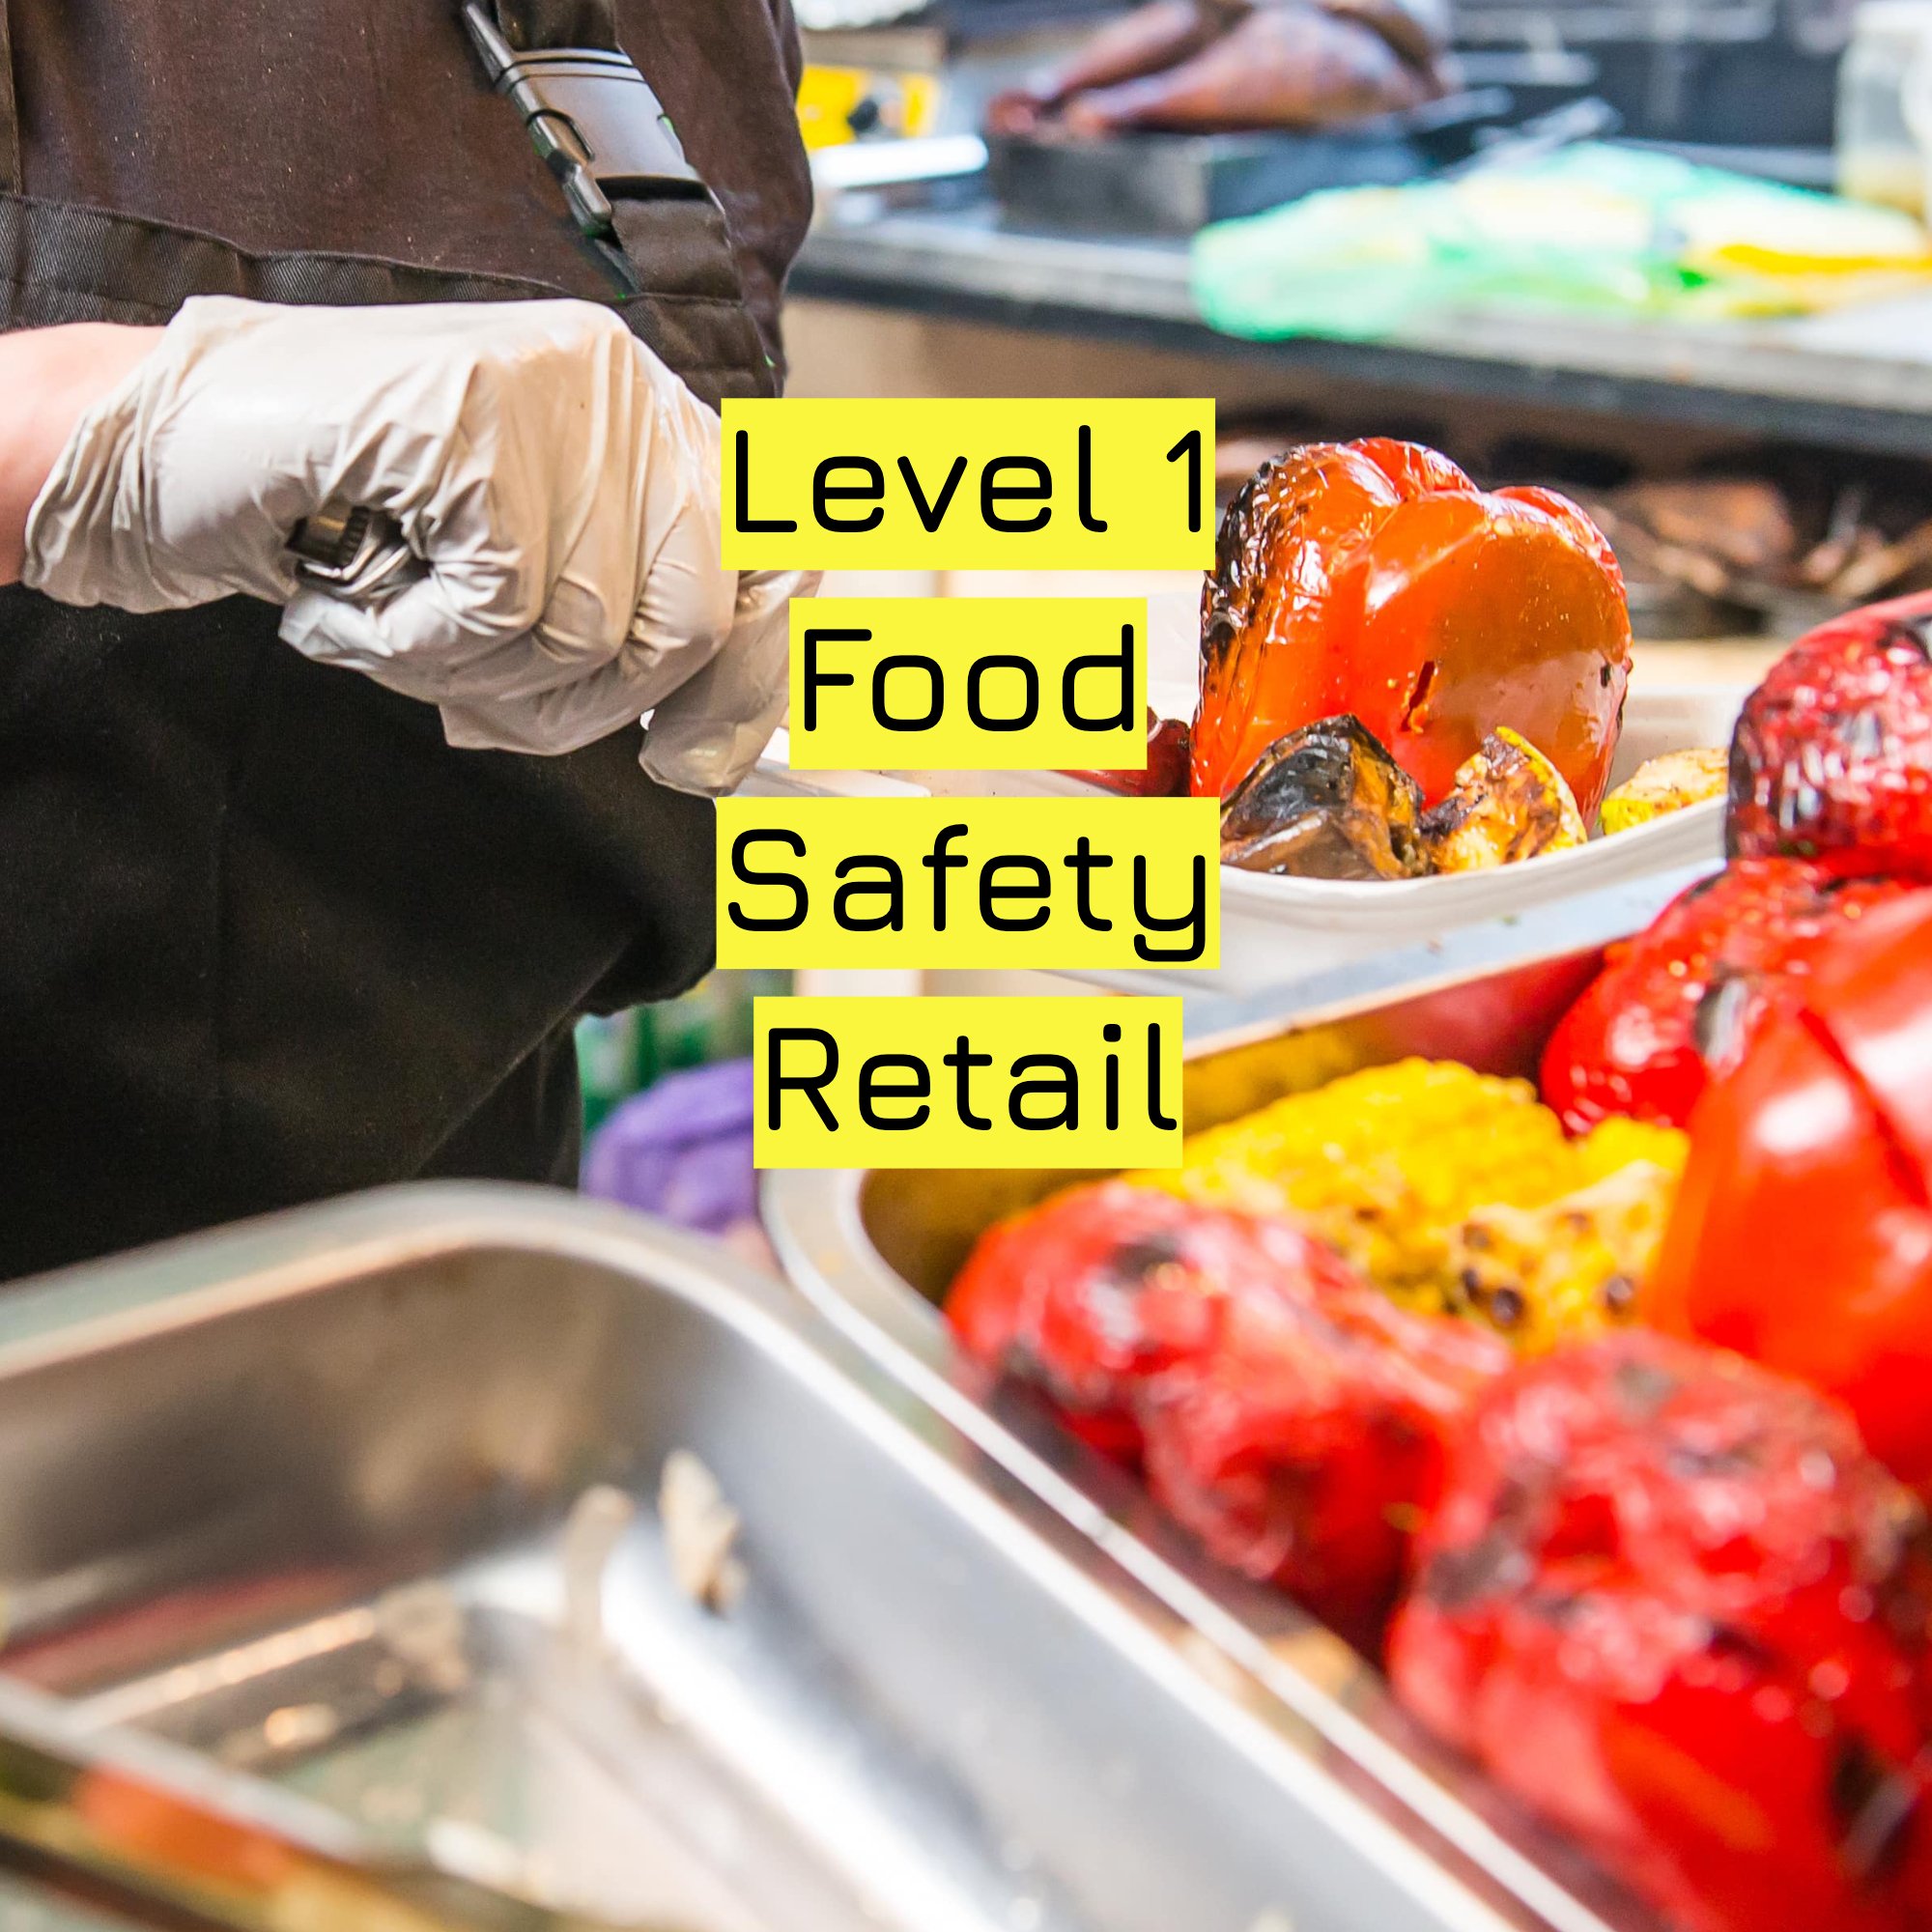 Level 1 Food Safety Retail.jpg